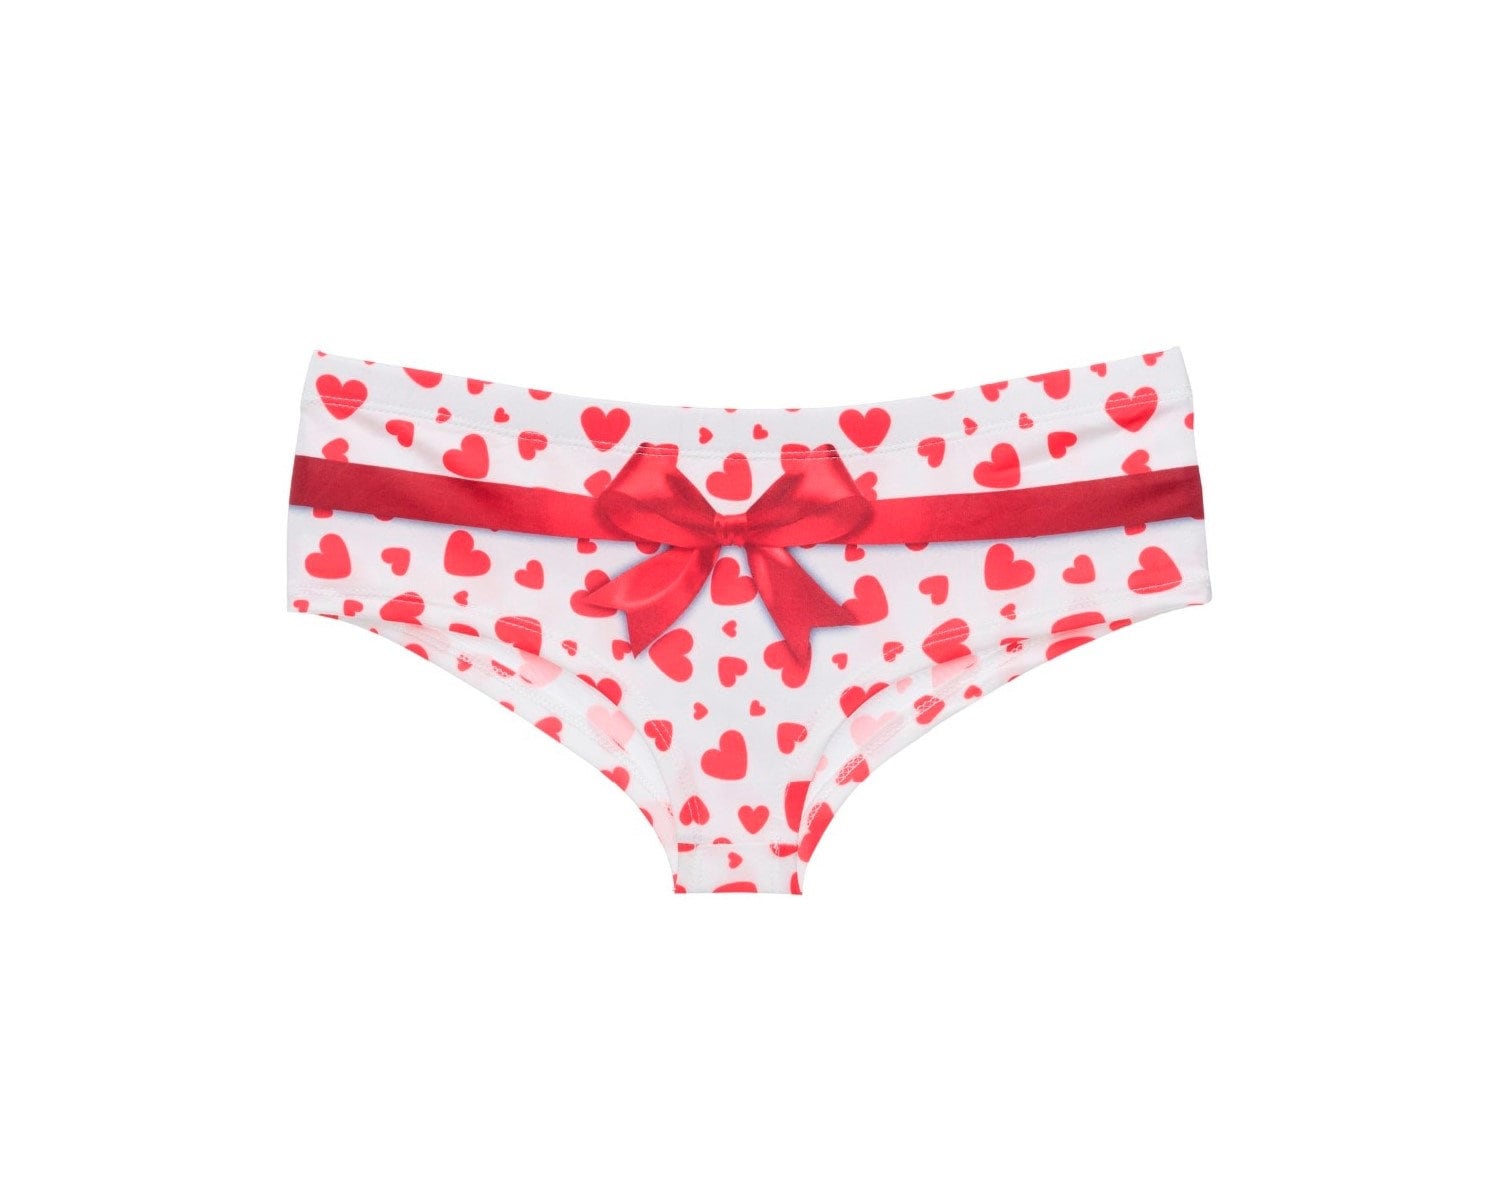 Custom - I Love You Cute Heart Print Love Designer Underwear Panties Thong  Special Gift Present